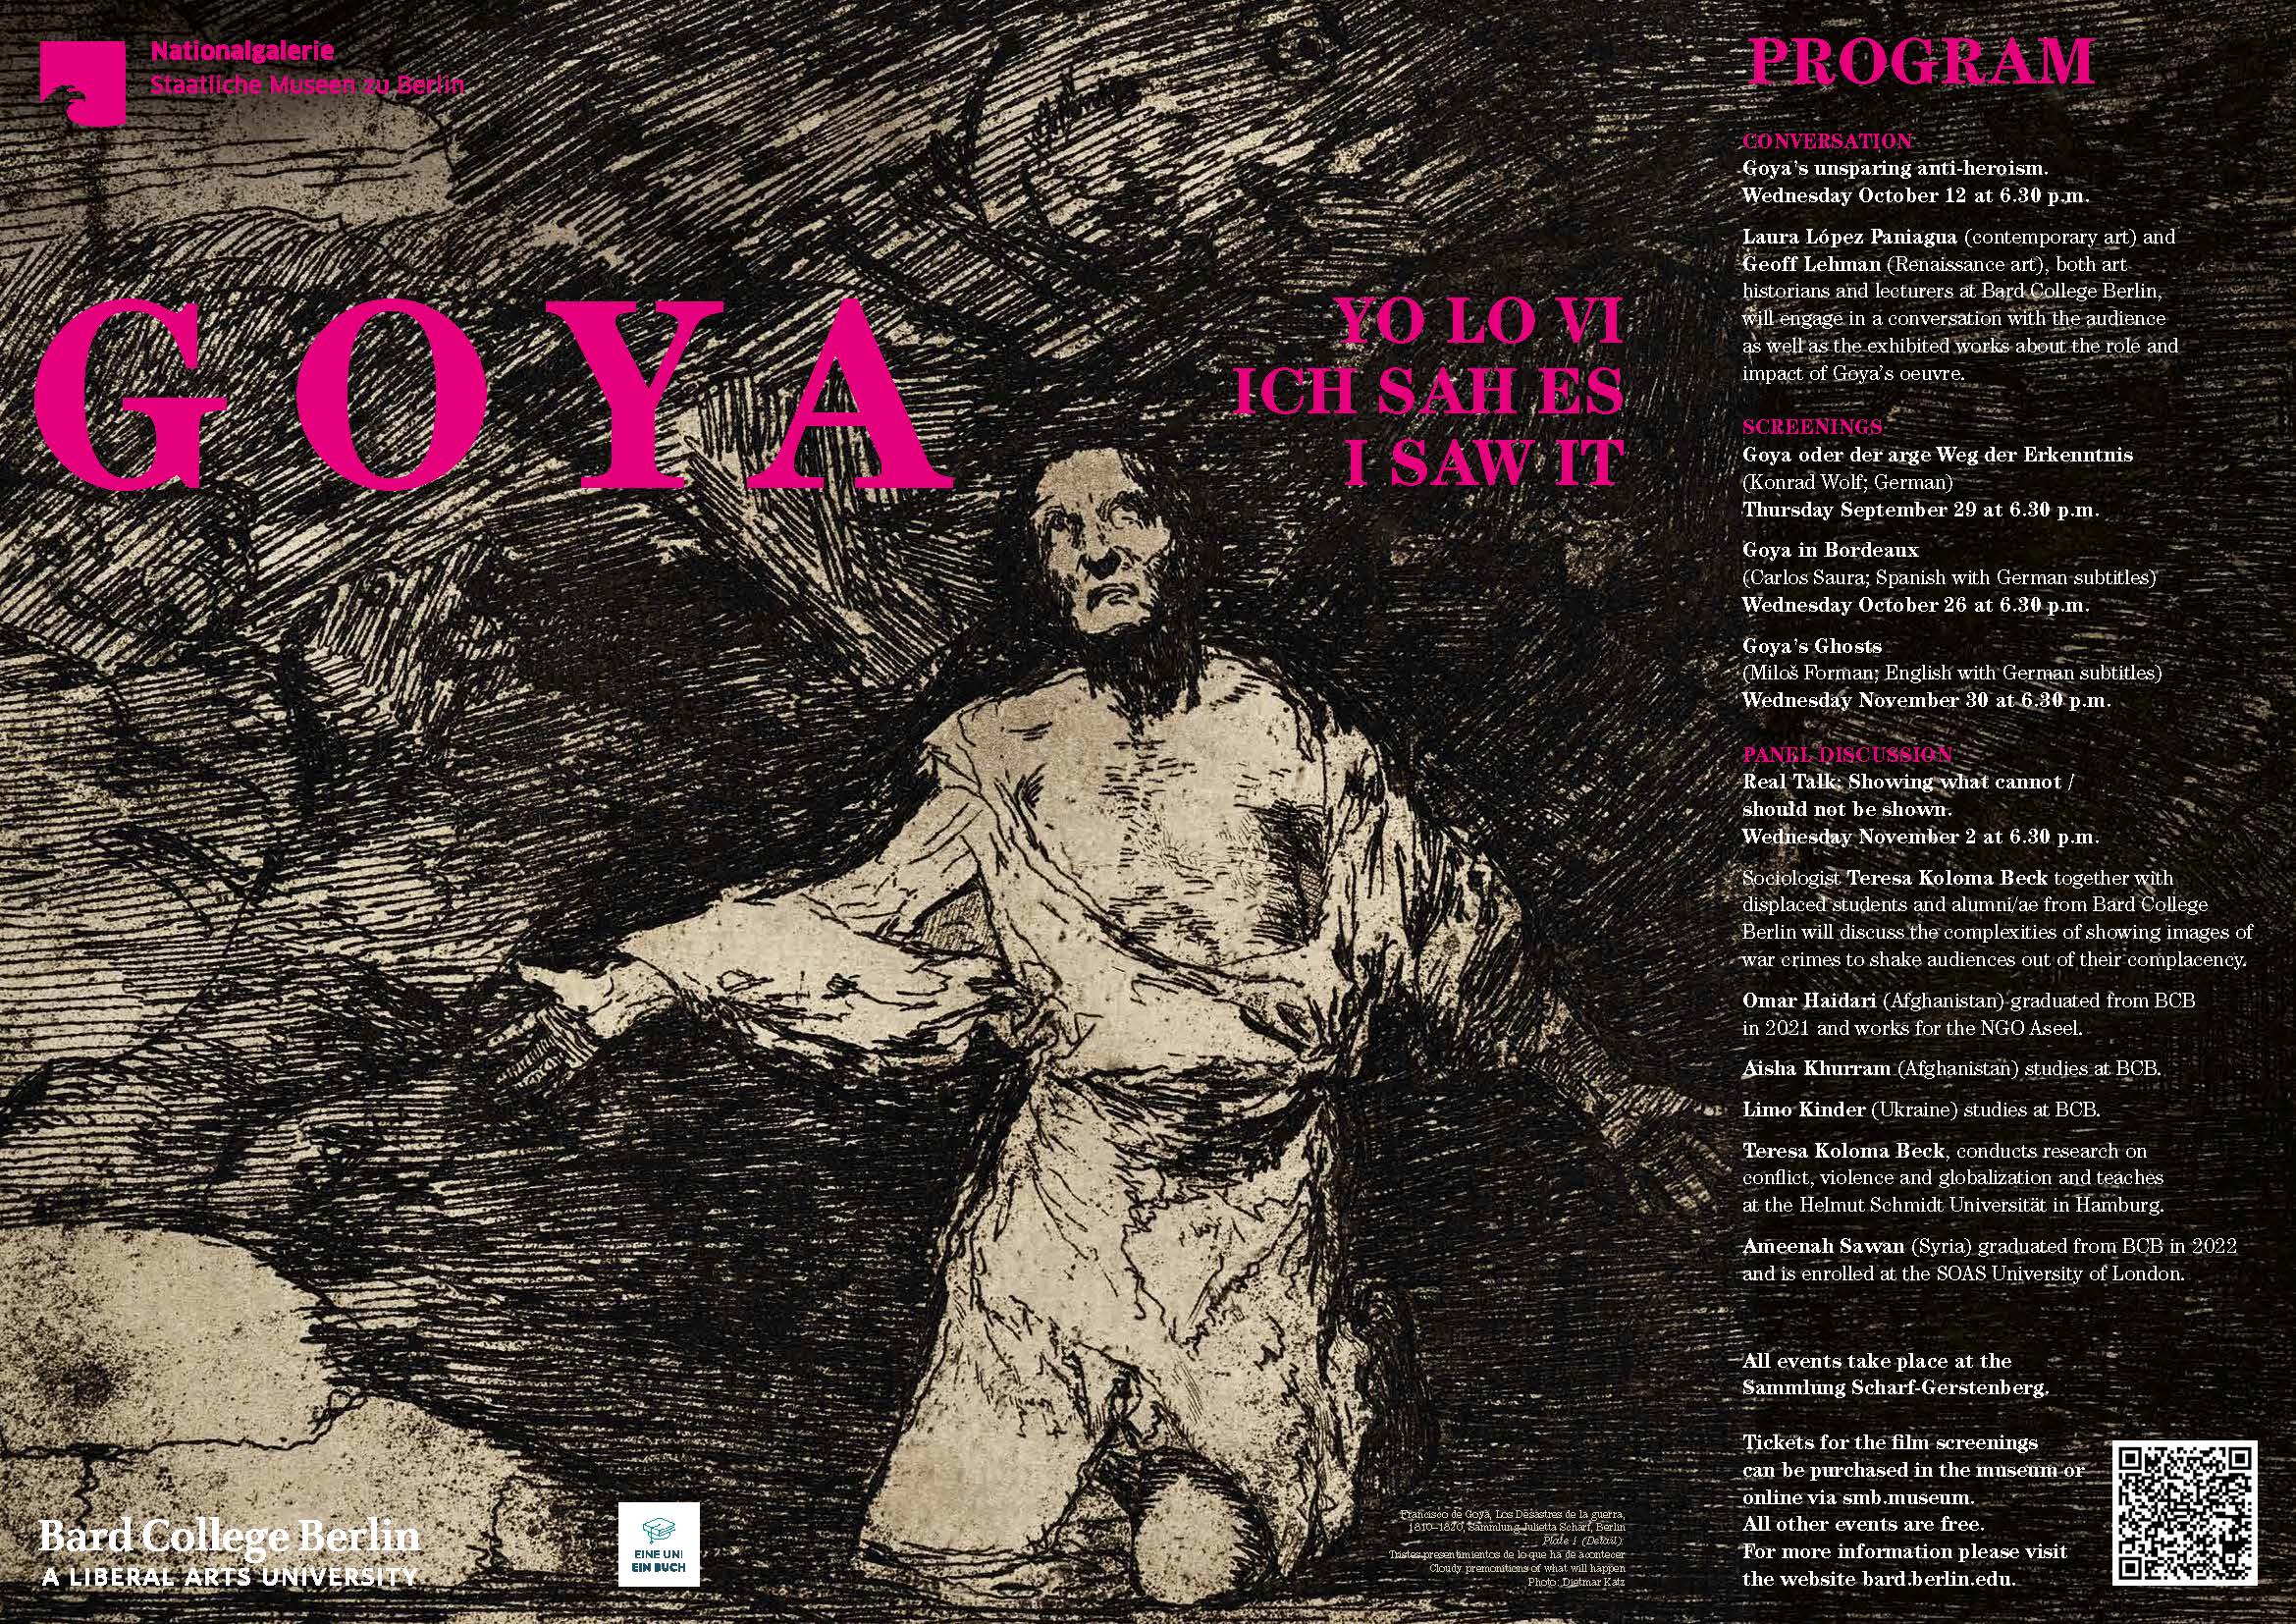 Visit https://berlin.bard.edu/news/events/exhibition-and-event-series-goya-yo-lo-vi-ich-sah-es-i-saw-it